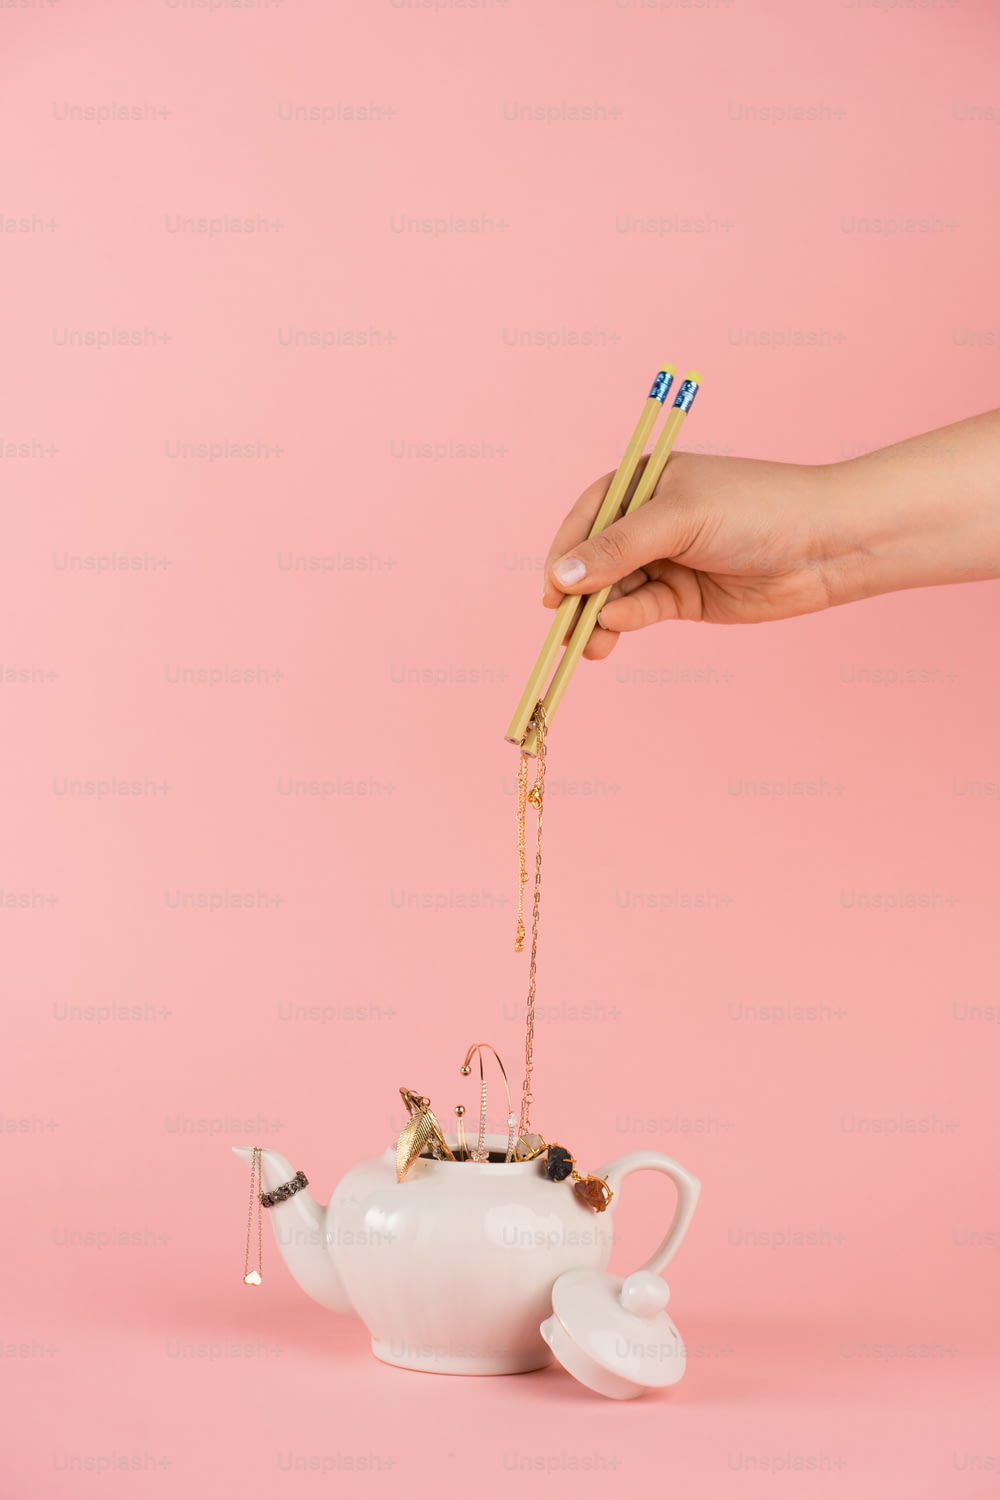 a person holding a pair of chopsticks over a teapot